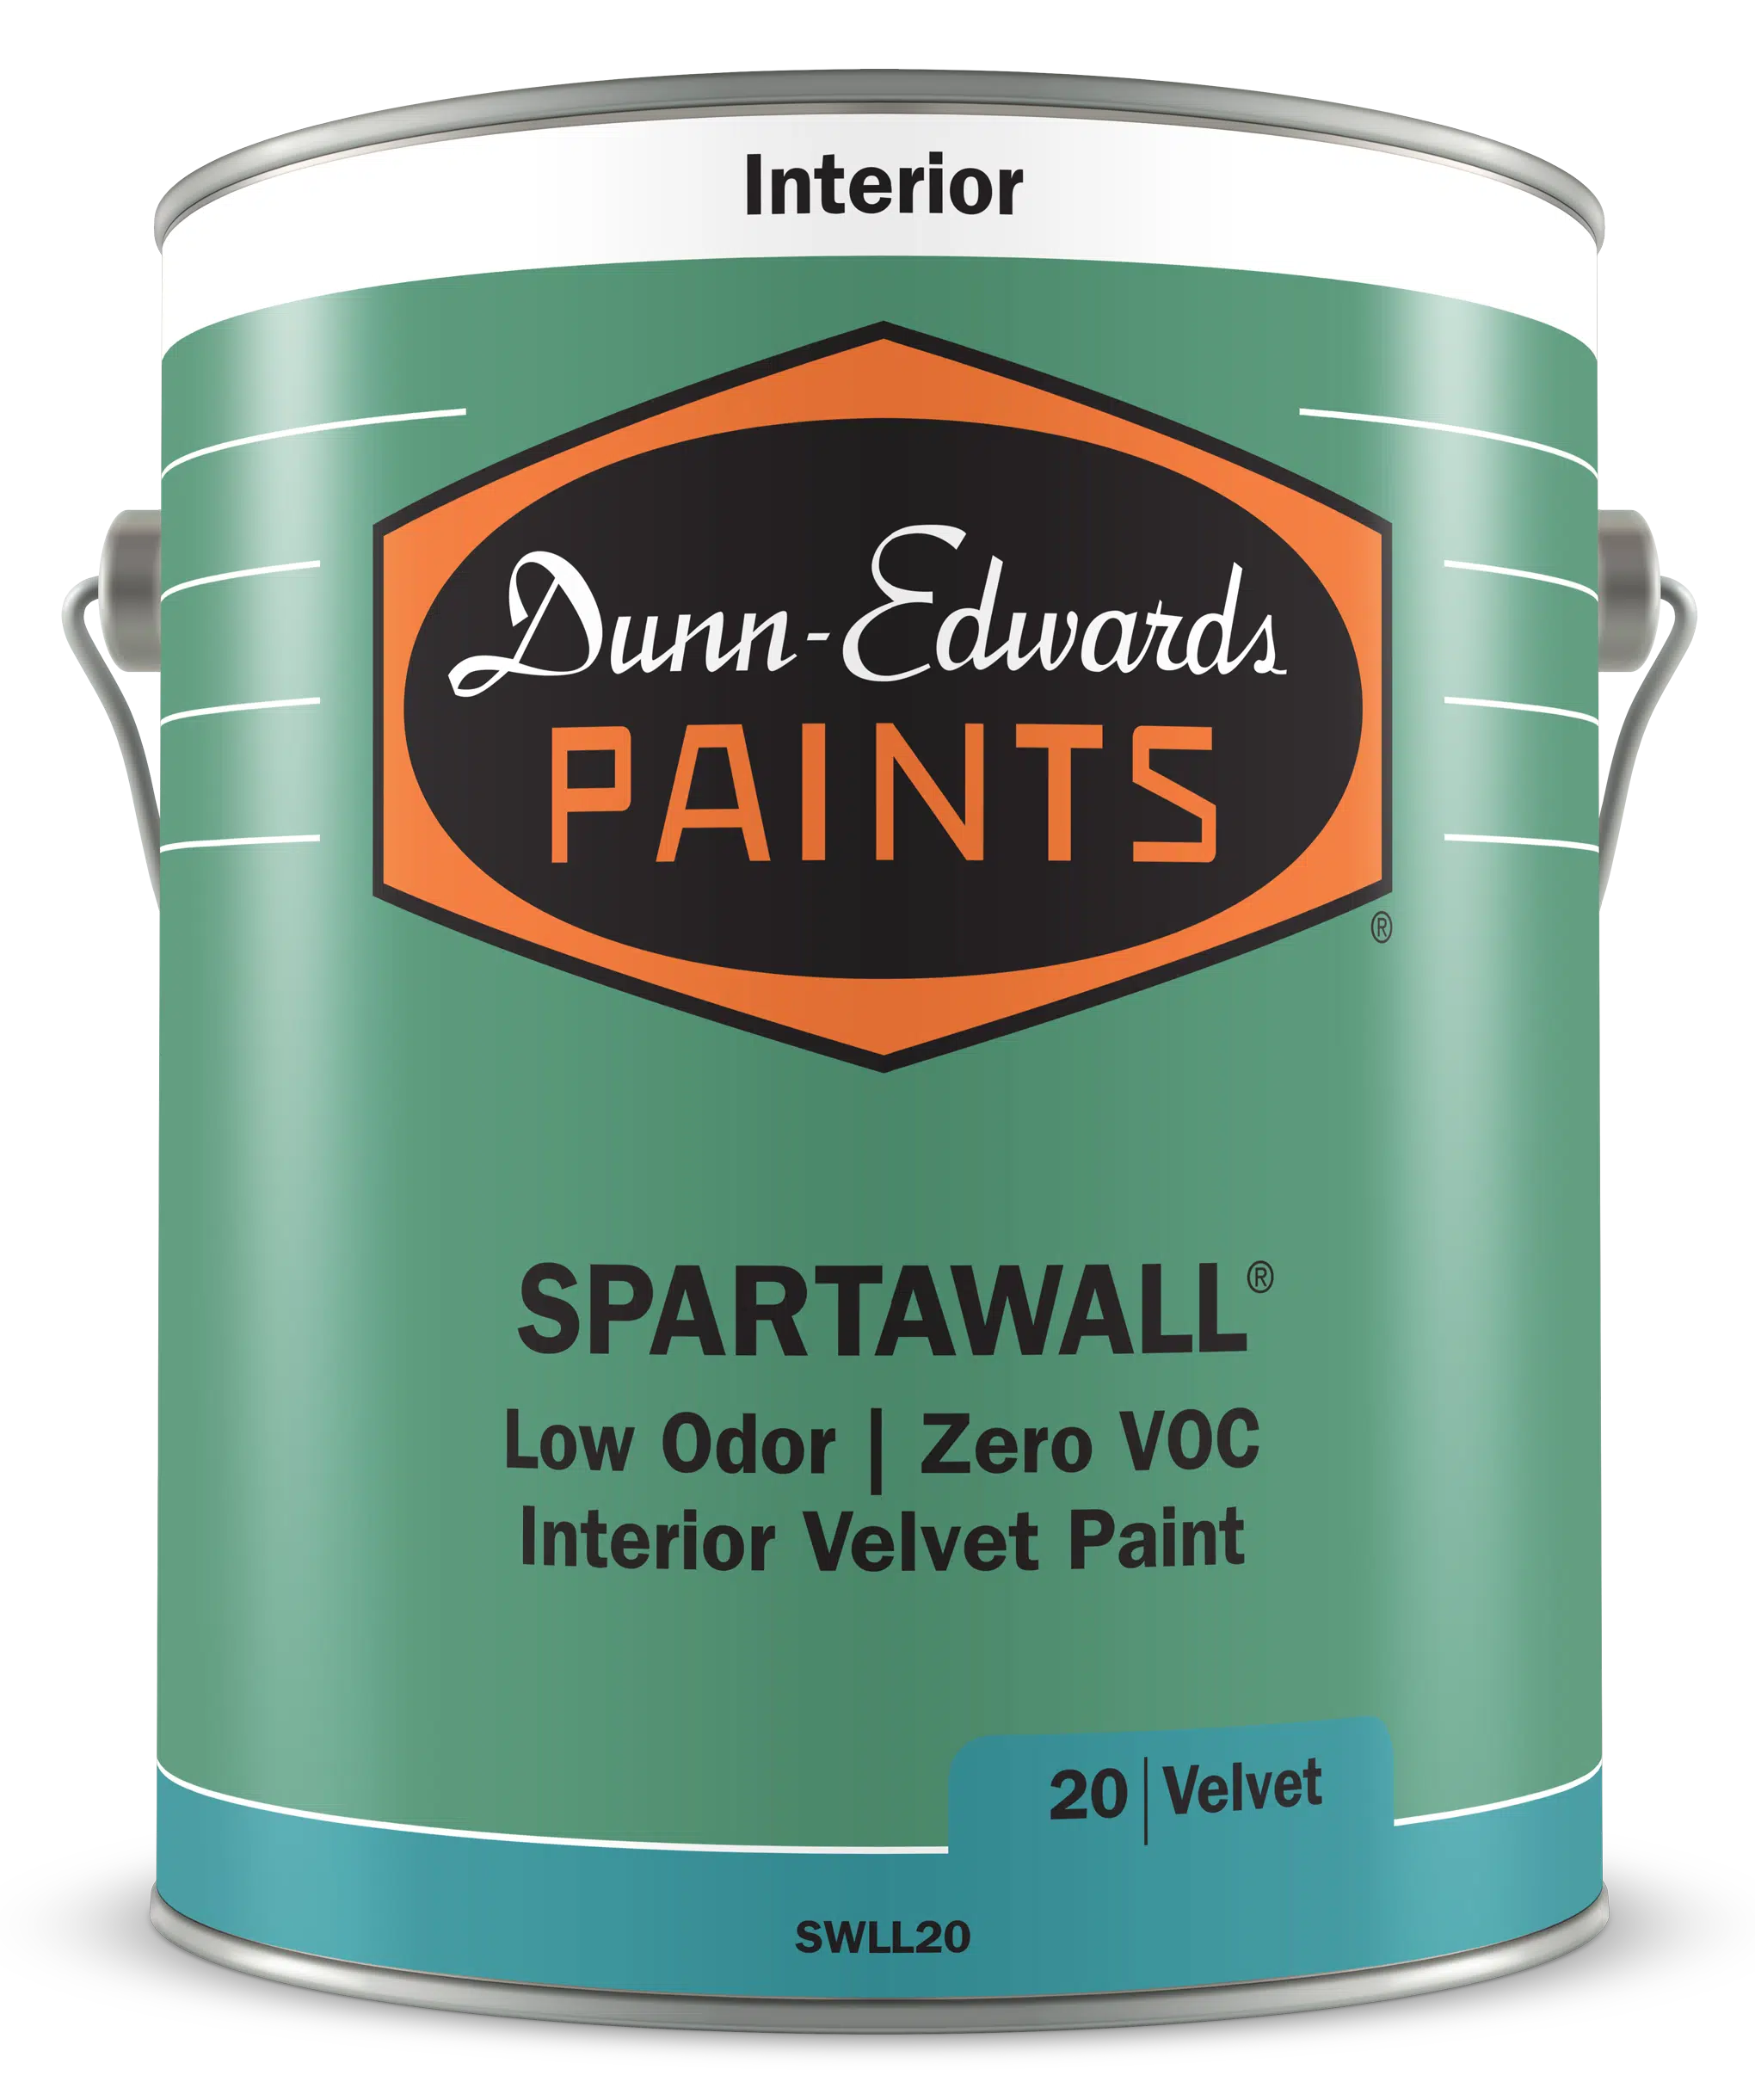 SPARTAWALL Interior Velvet Paint Can